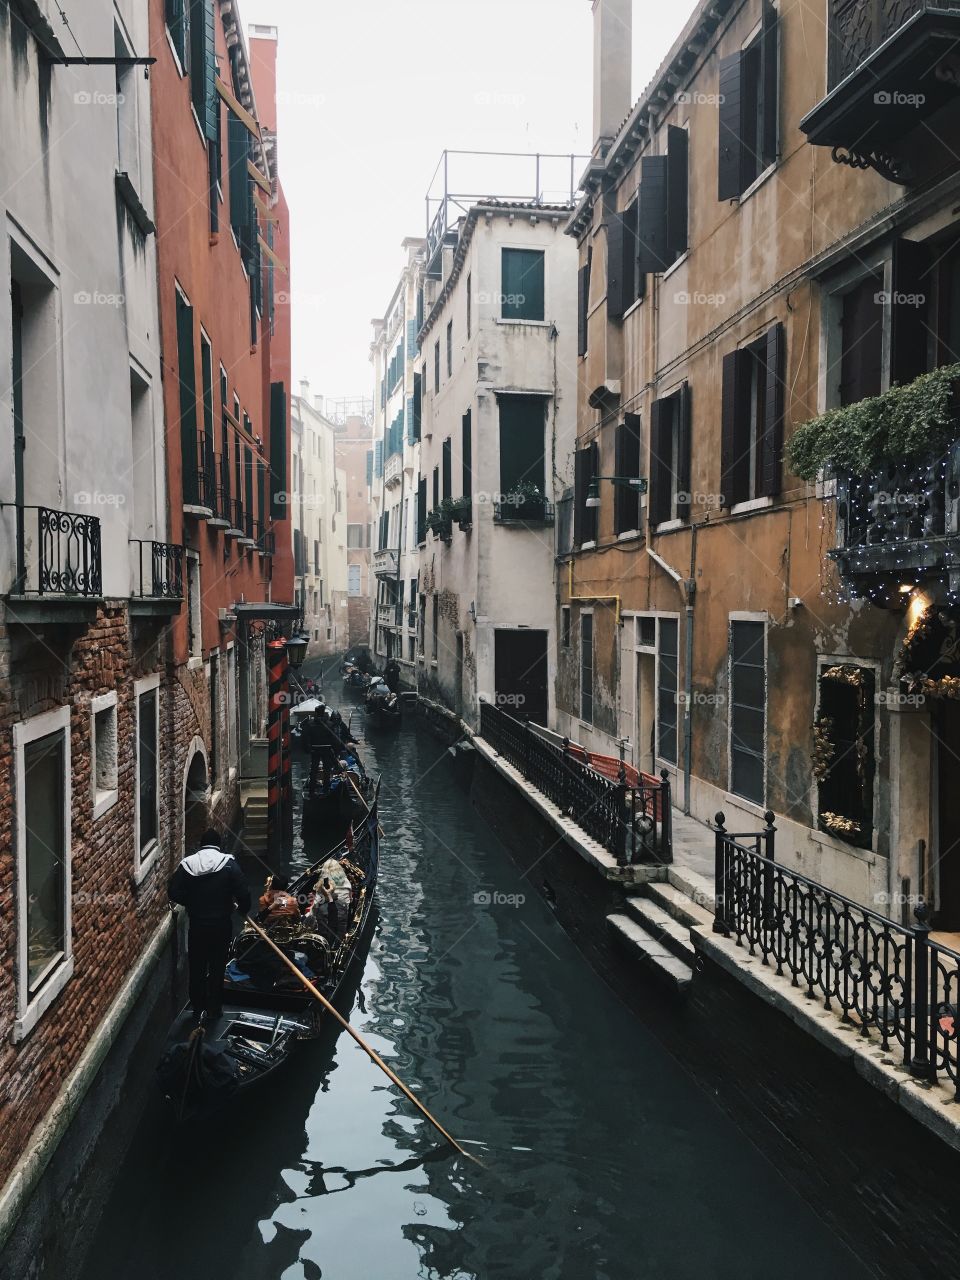  Gondolas on the Venetian Canal